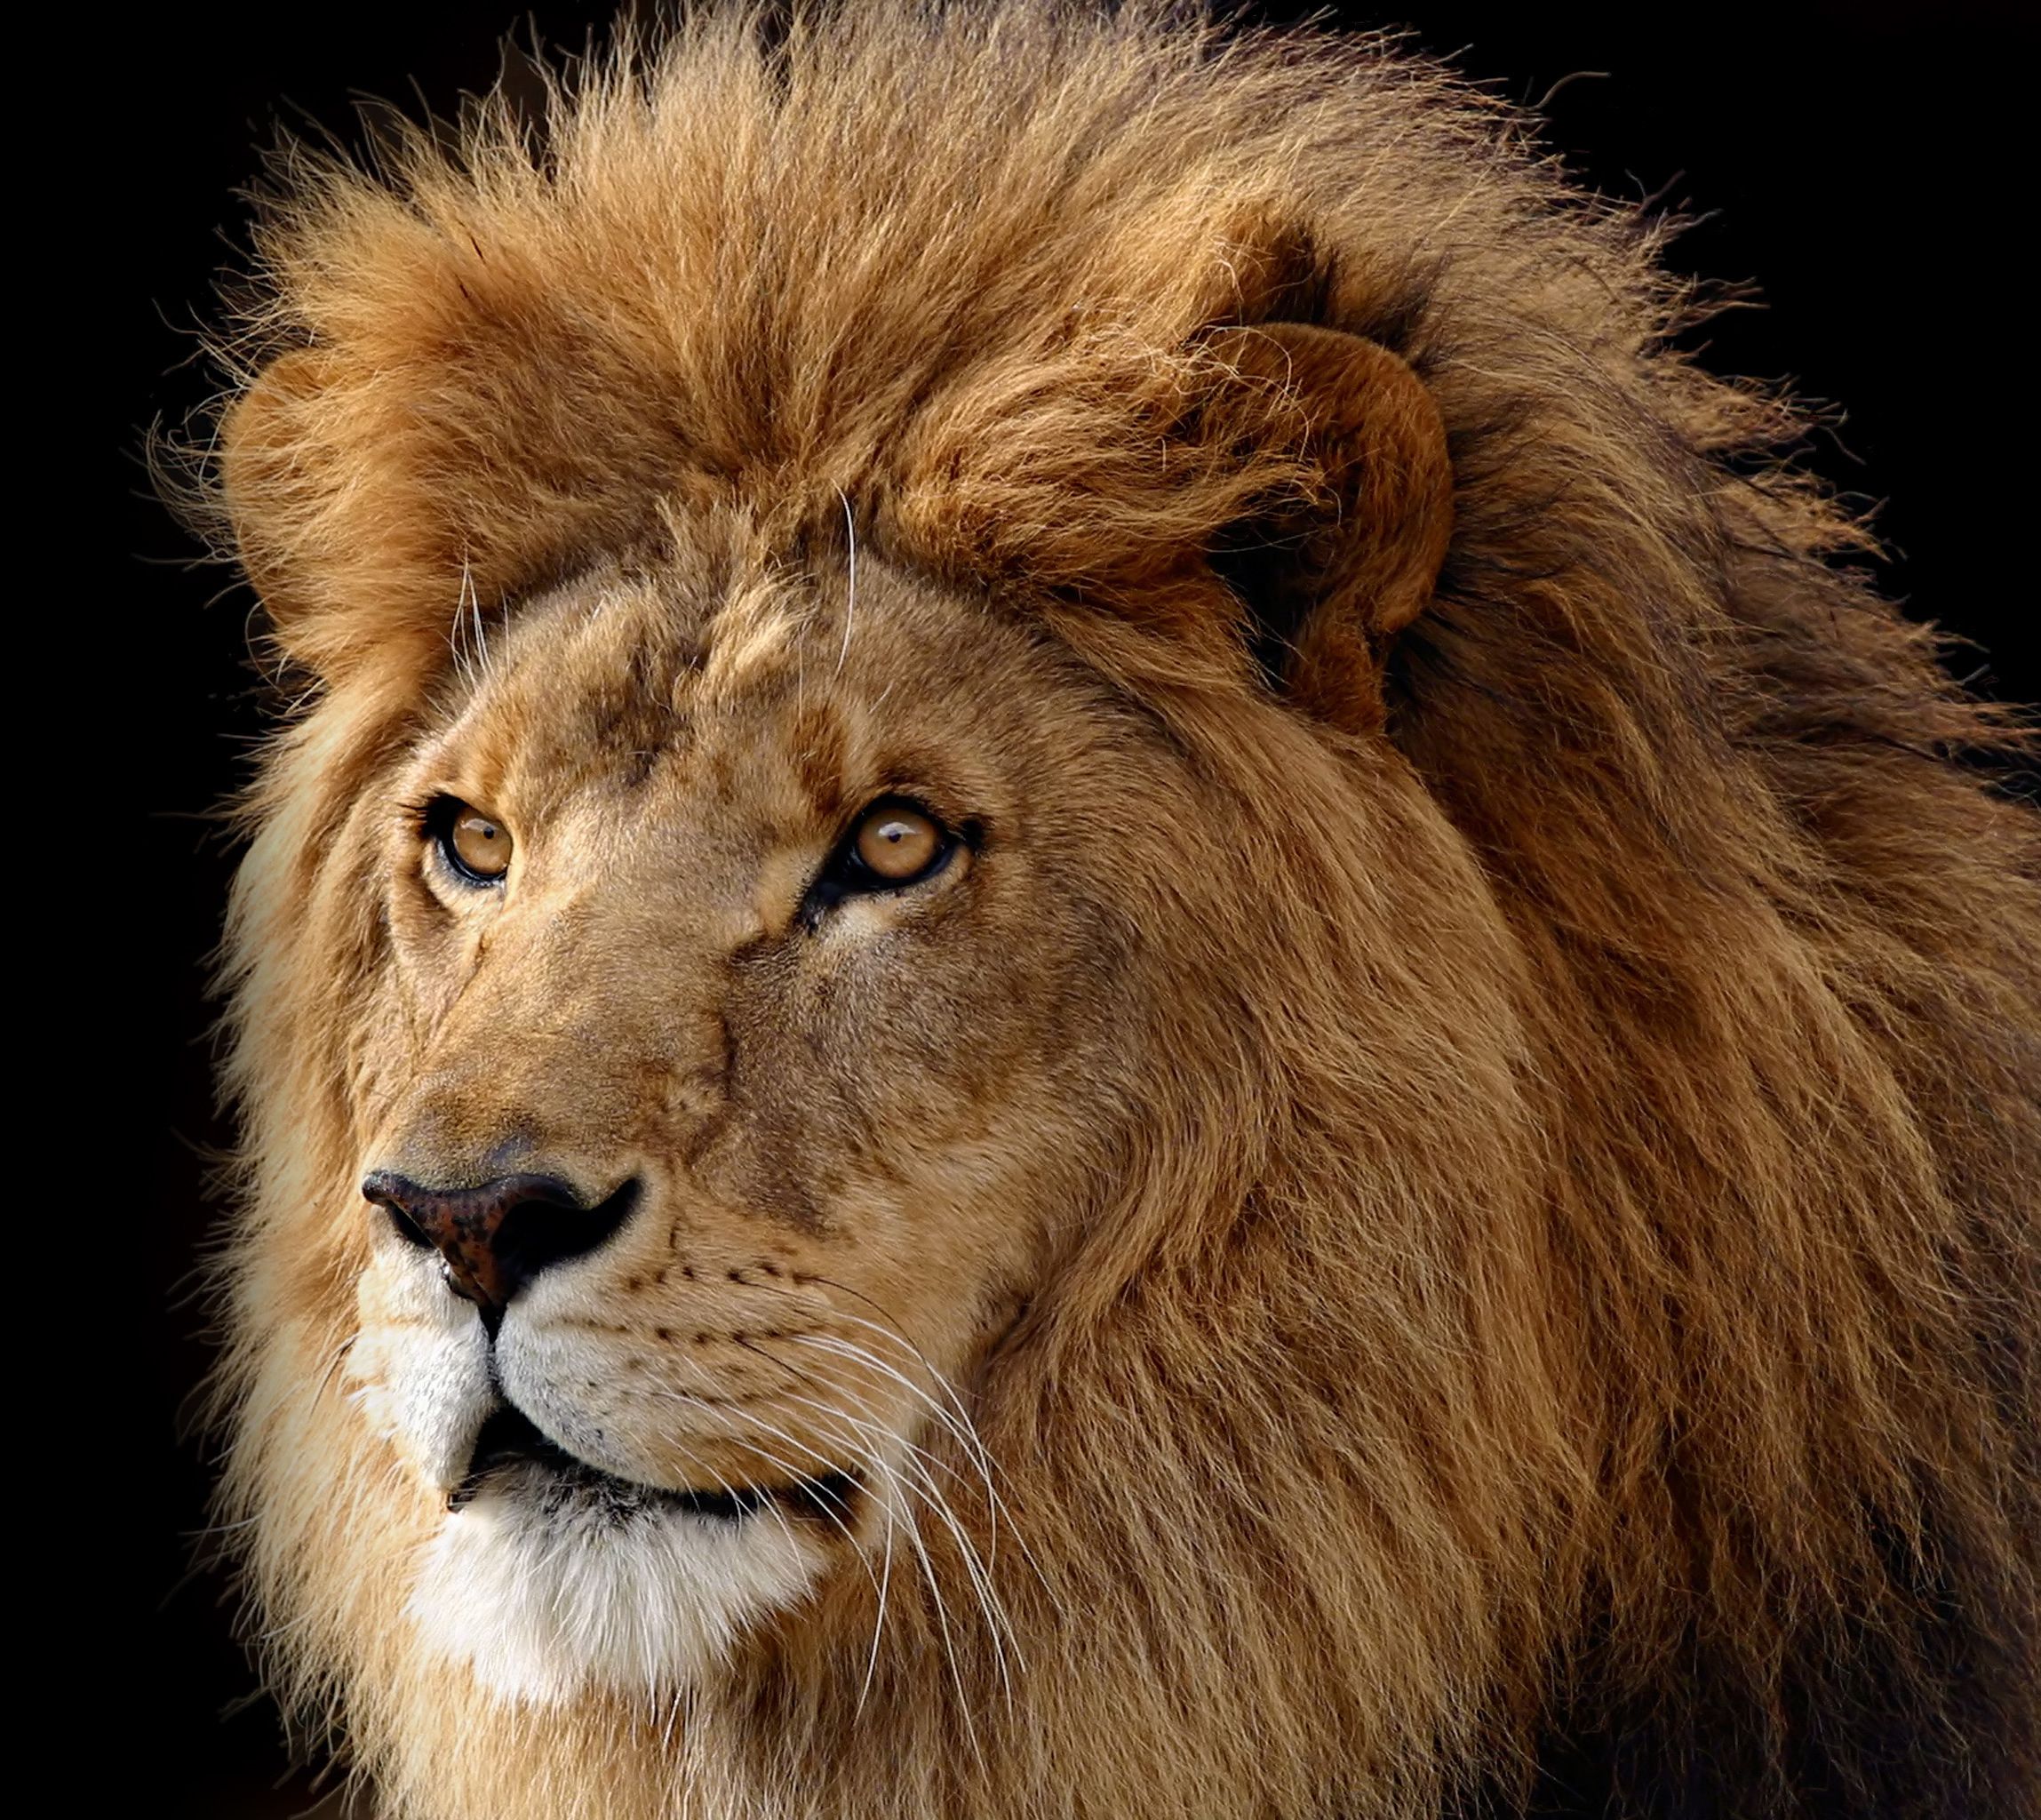 Download wallpaper: lion, photo, wallpaper for desktop, Lions